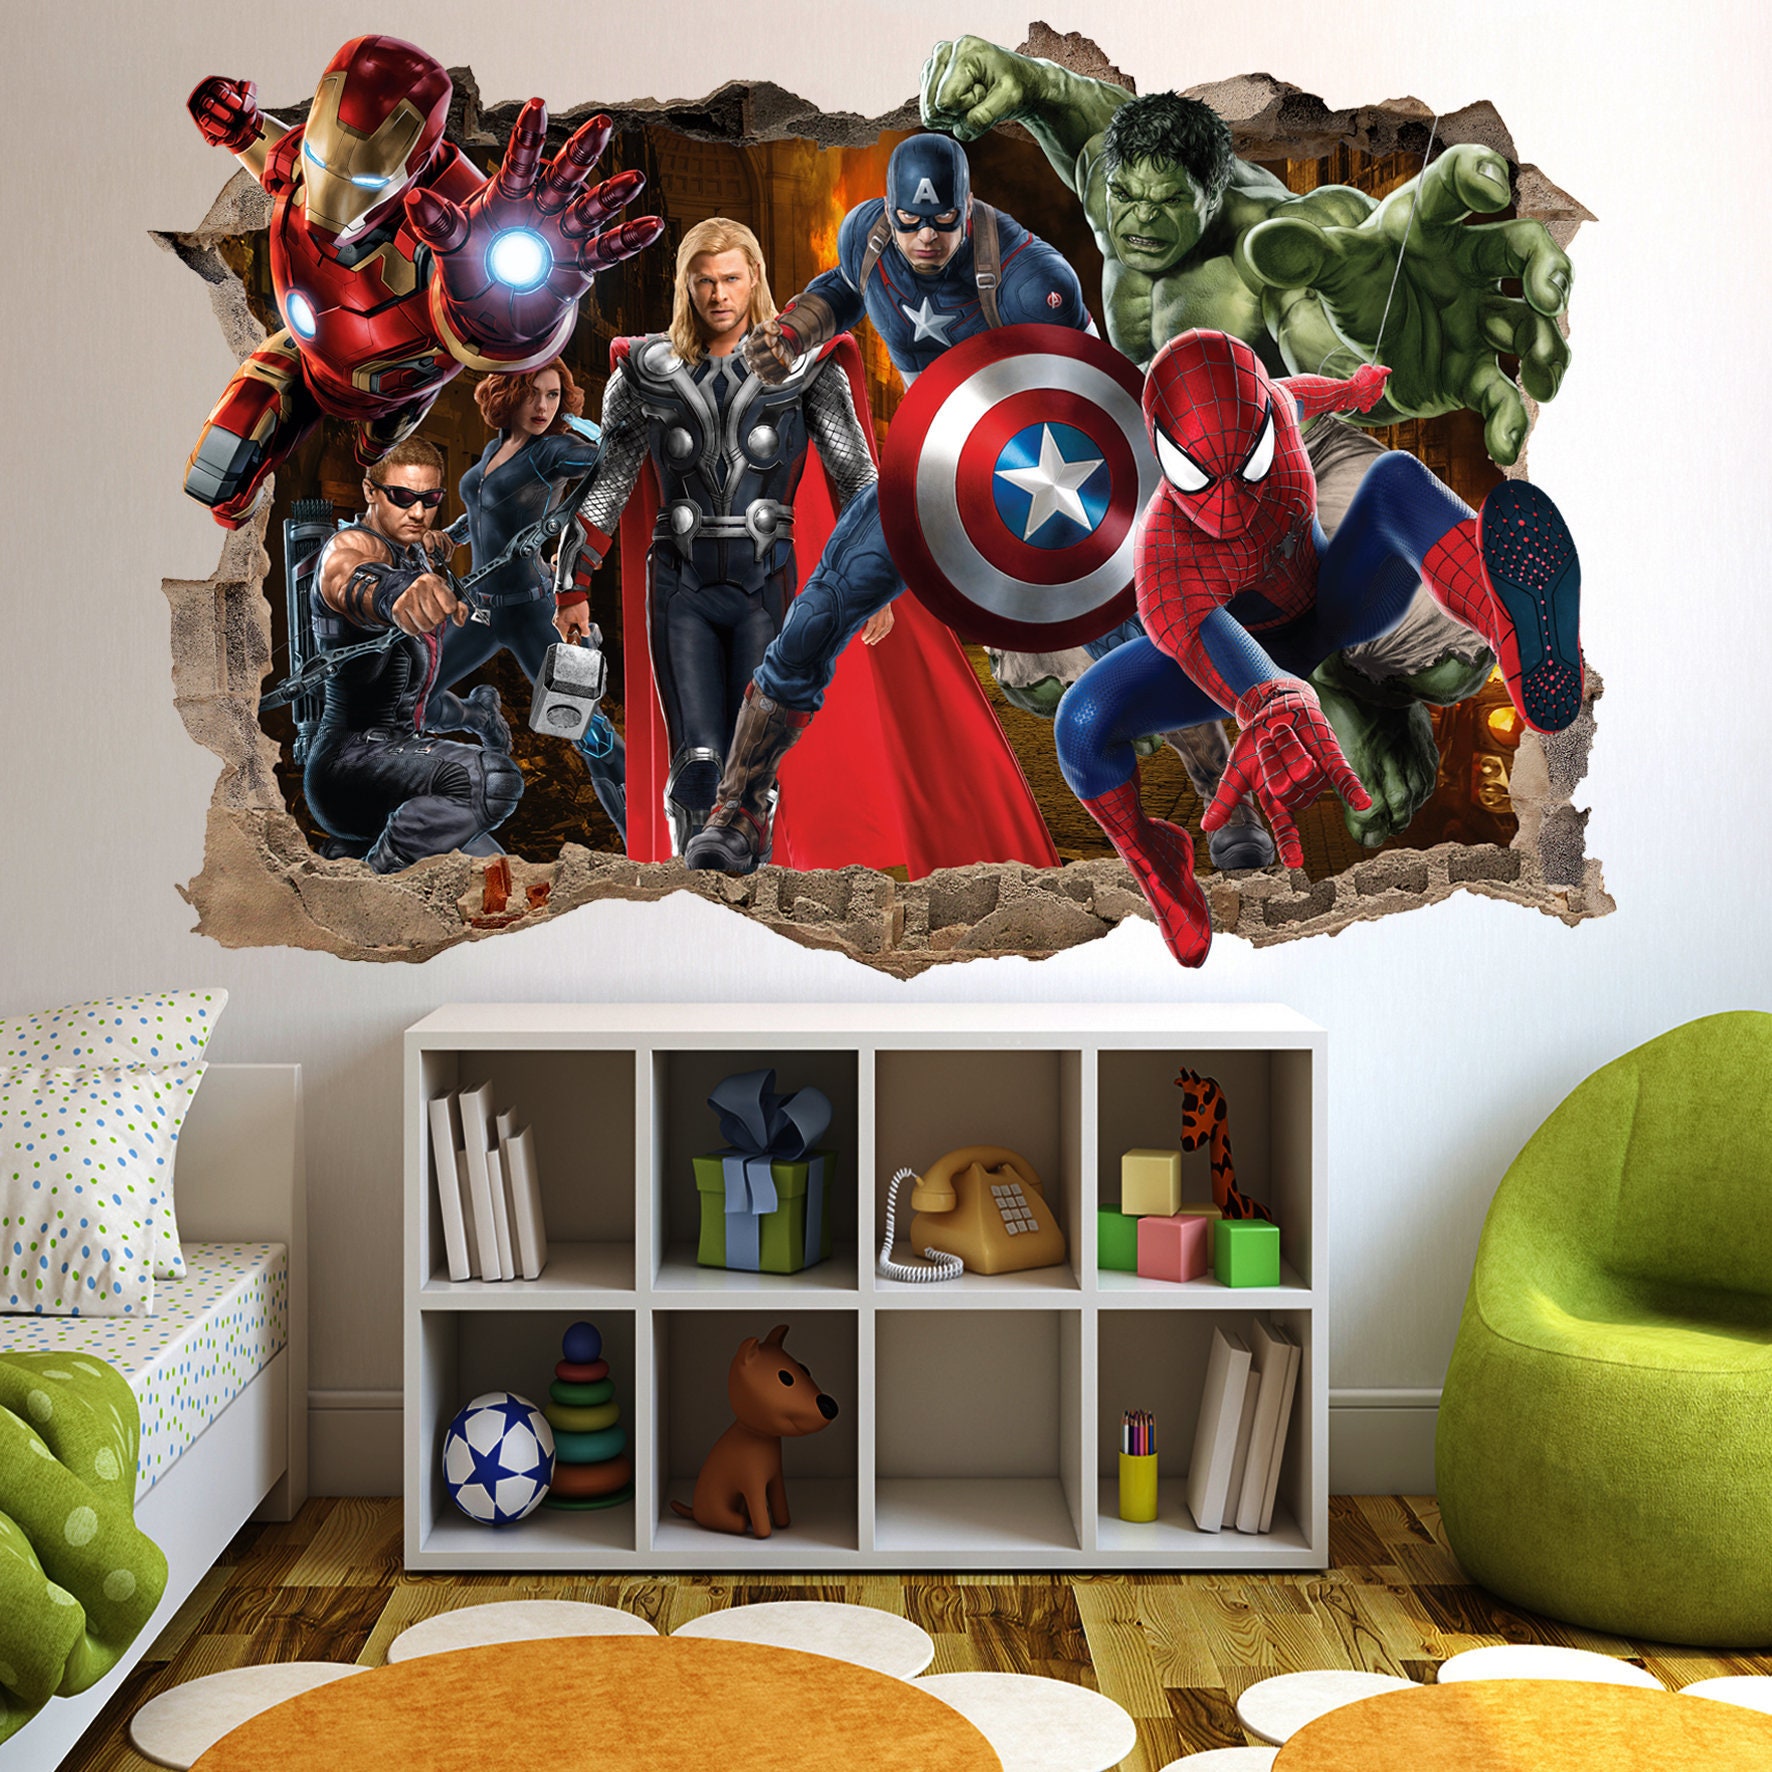 Jameswish Superhero Wall Sticker 3D Avengers Wall Decals Wall Art for Kids Boys Bedroom Playroom 15.7 x 23.6 Inches 